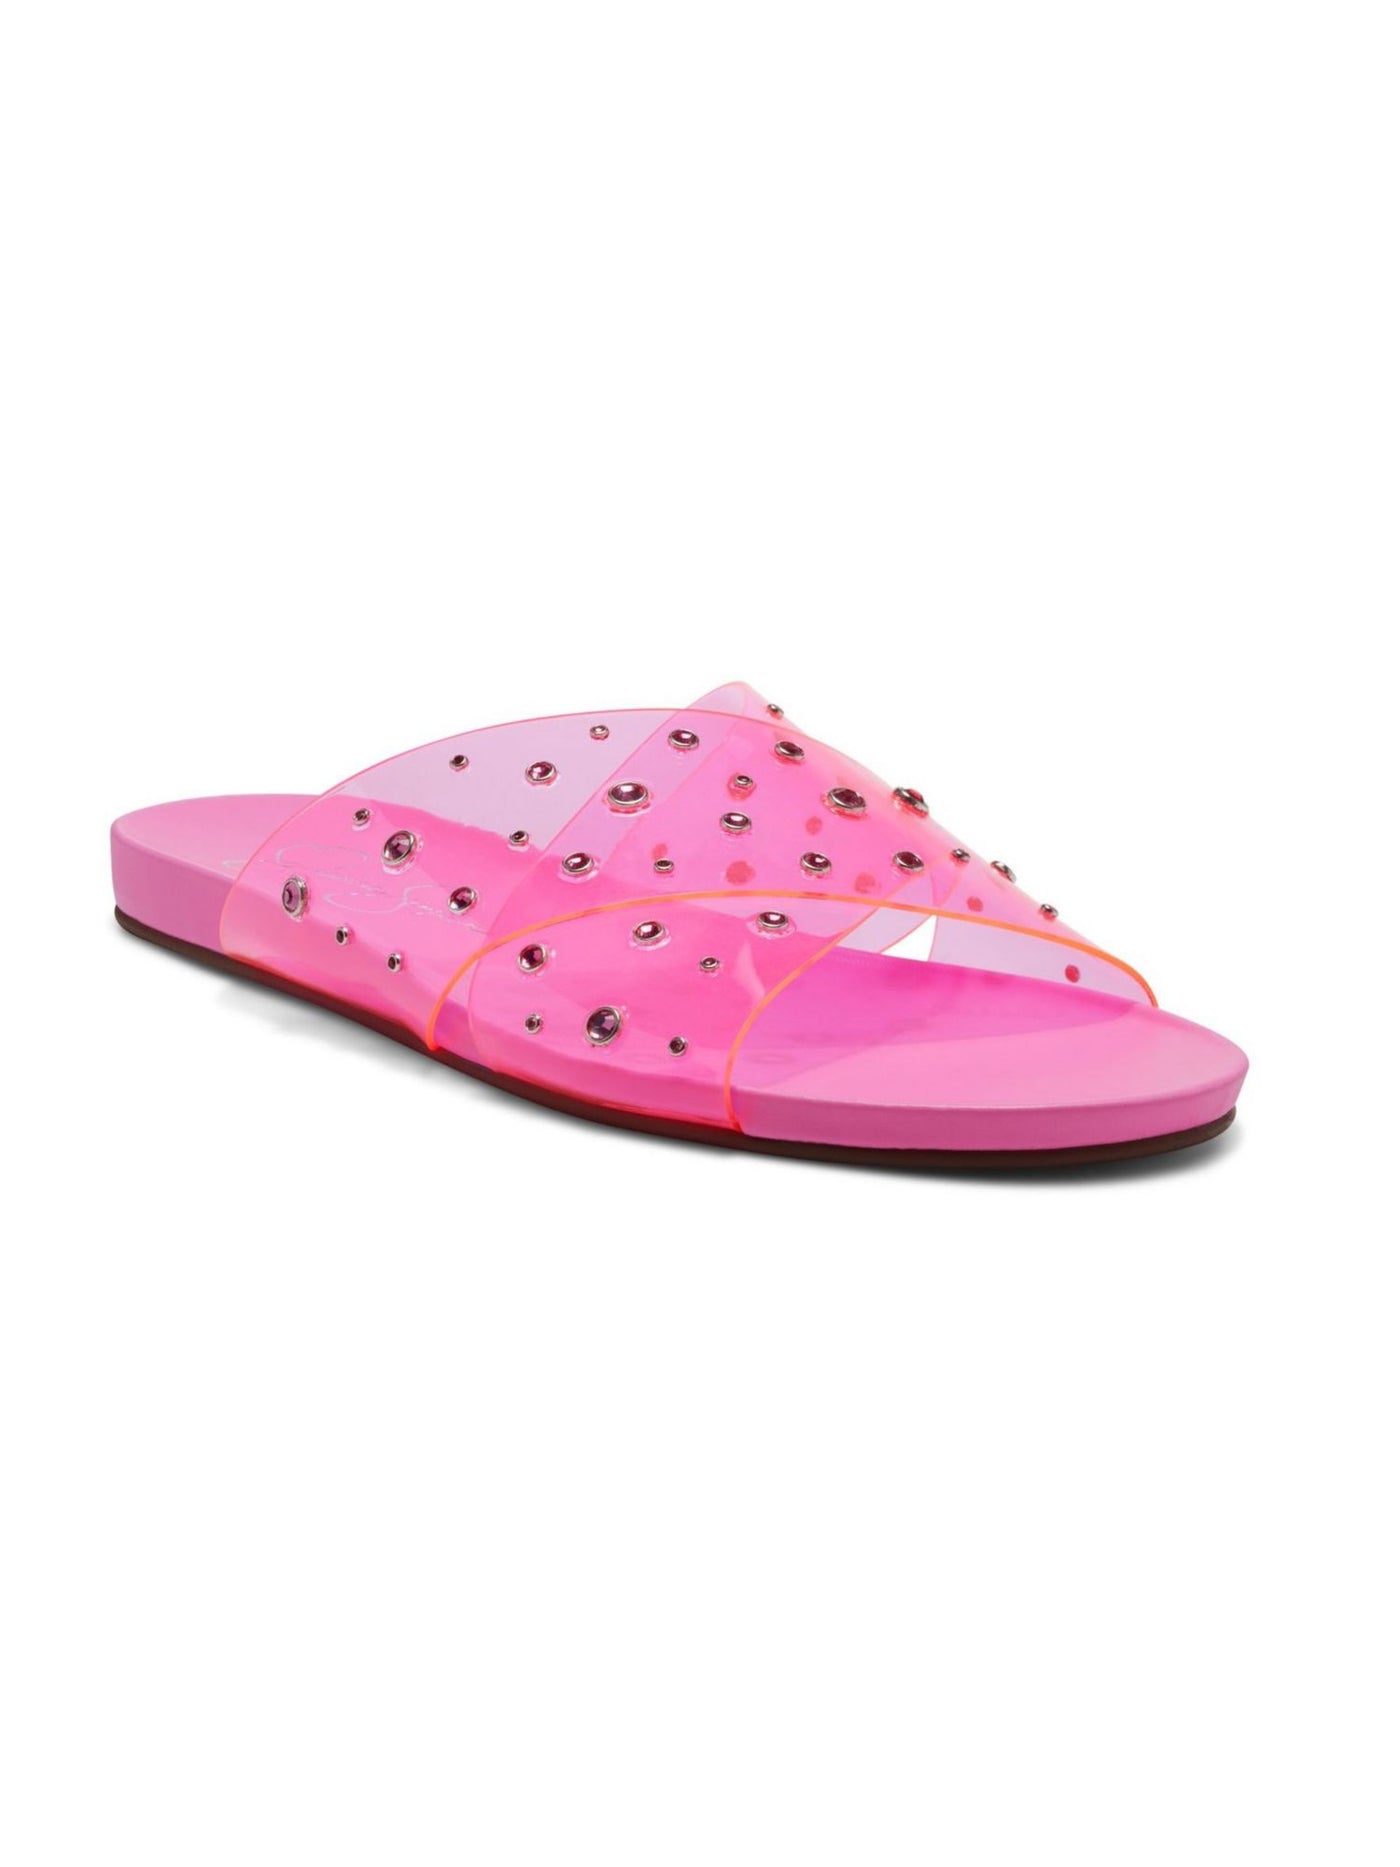 JESSICA SIMPSON Womens Pink Clear Lucite Straps Embellished Rhinestone Tislie Slip On Slide Sandals Shoes 8.5 M